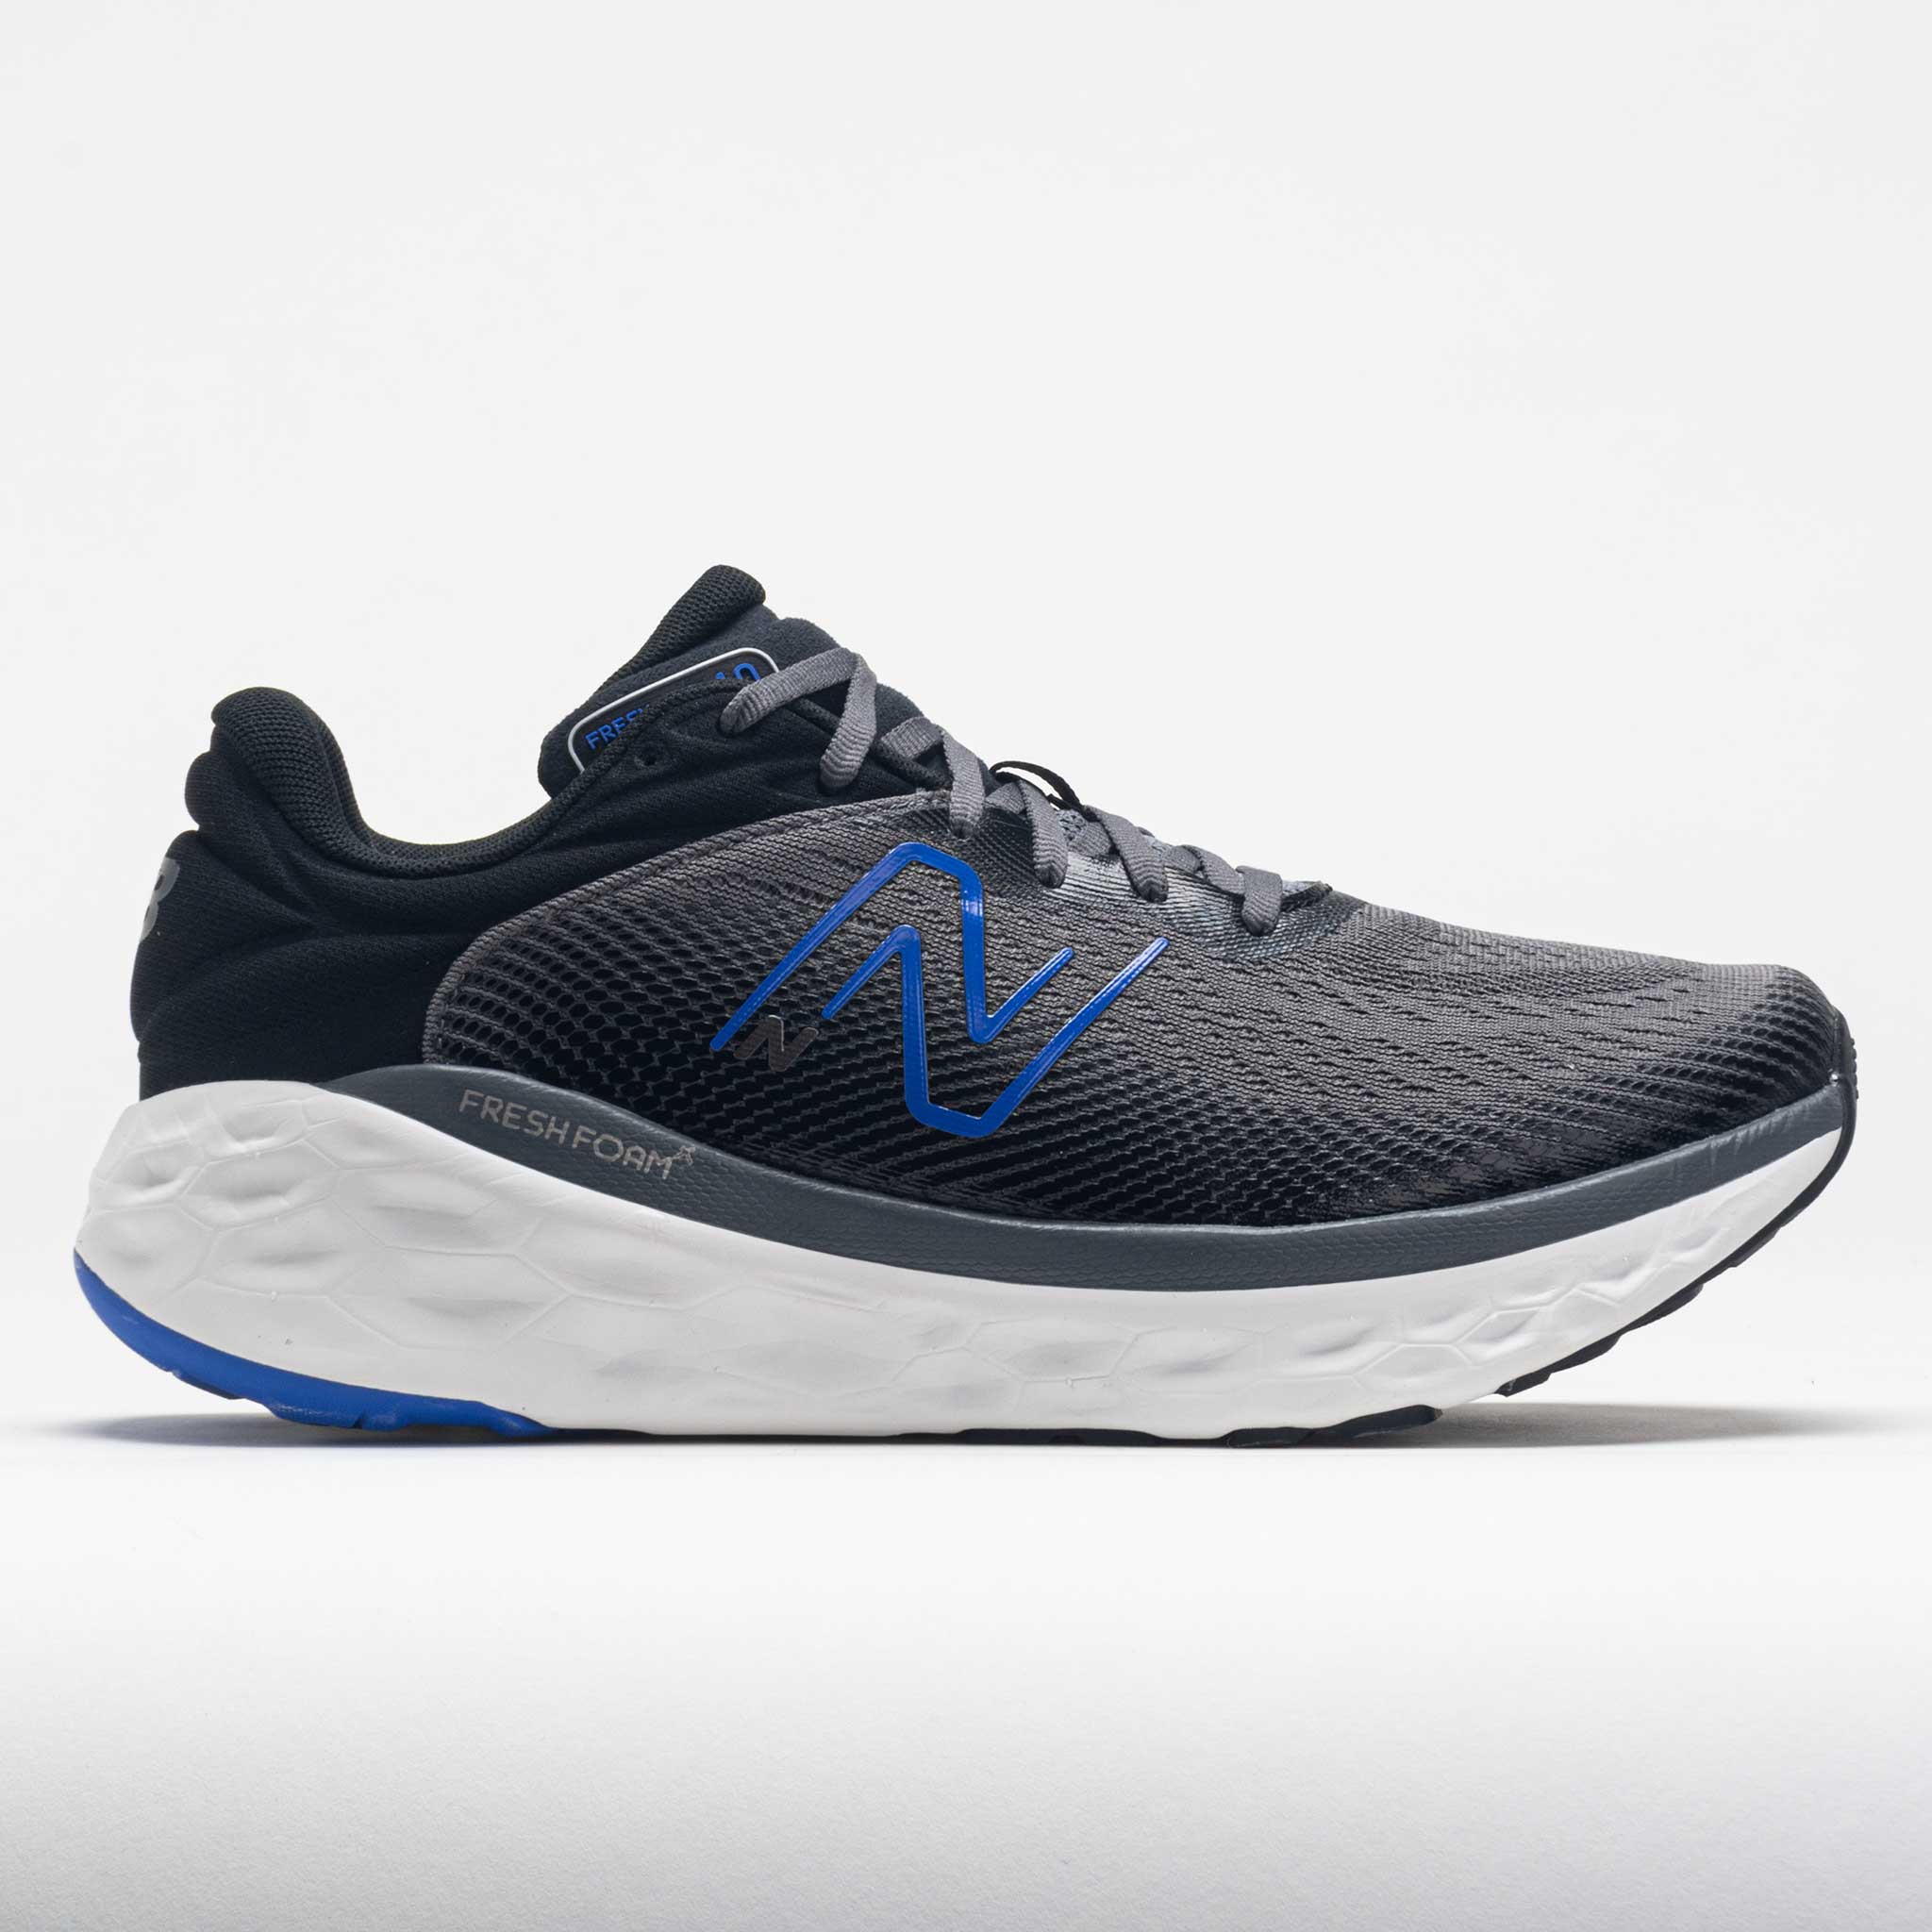 New Balance Fresh Foam X 840v1 Men's Running Shoes Castlerock/Marine Blue/Black Size 14 Width D - Medium